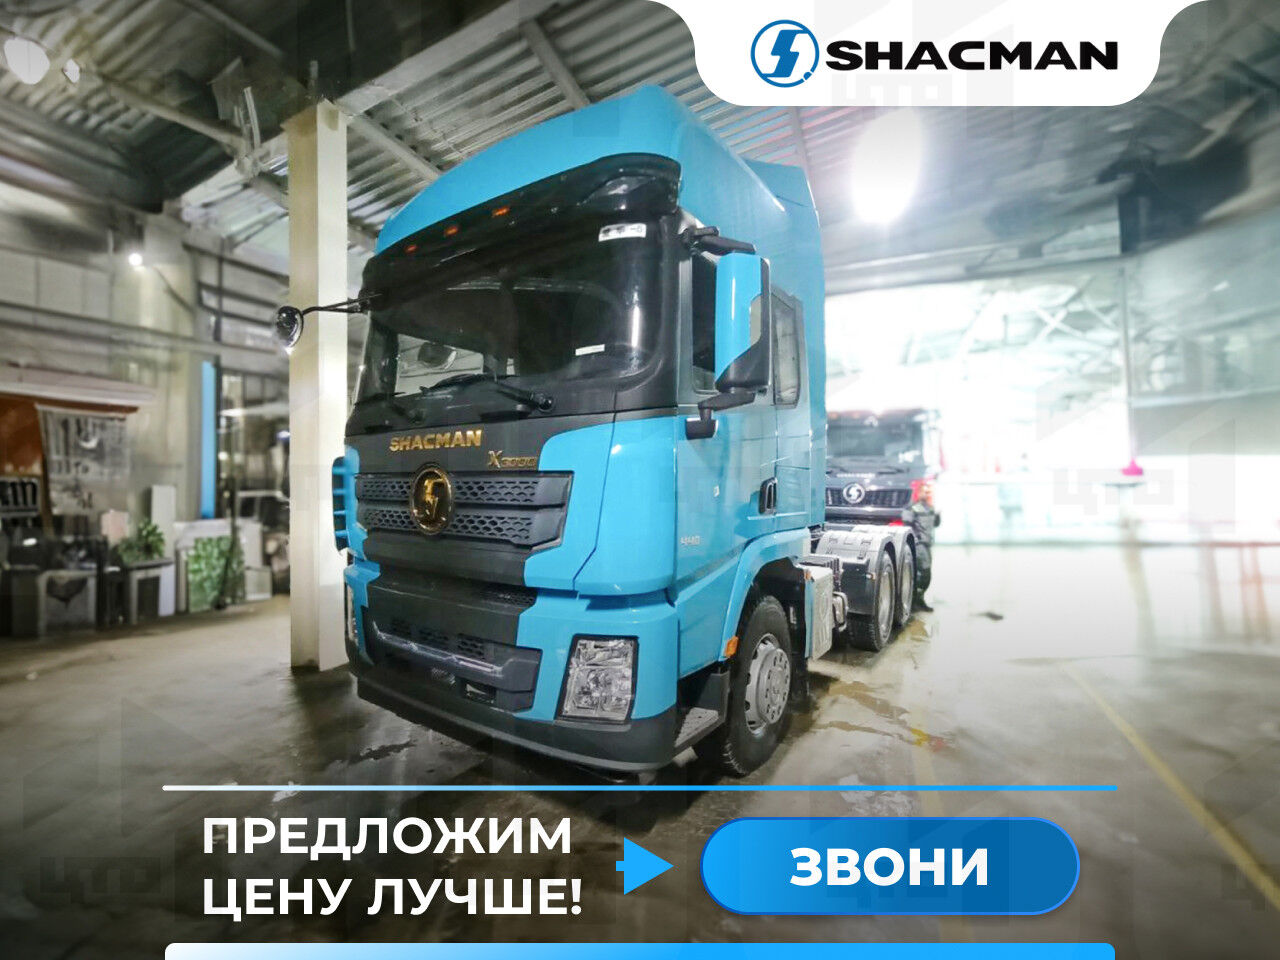 Тягач Shacman SX42584W324C 6x4 440 л.с. blue Shacman (Shaanxi)